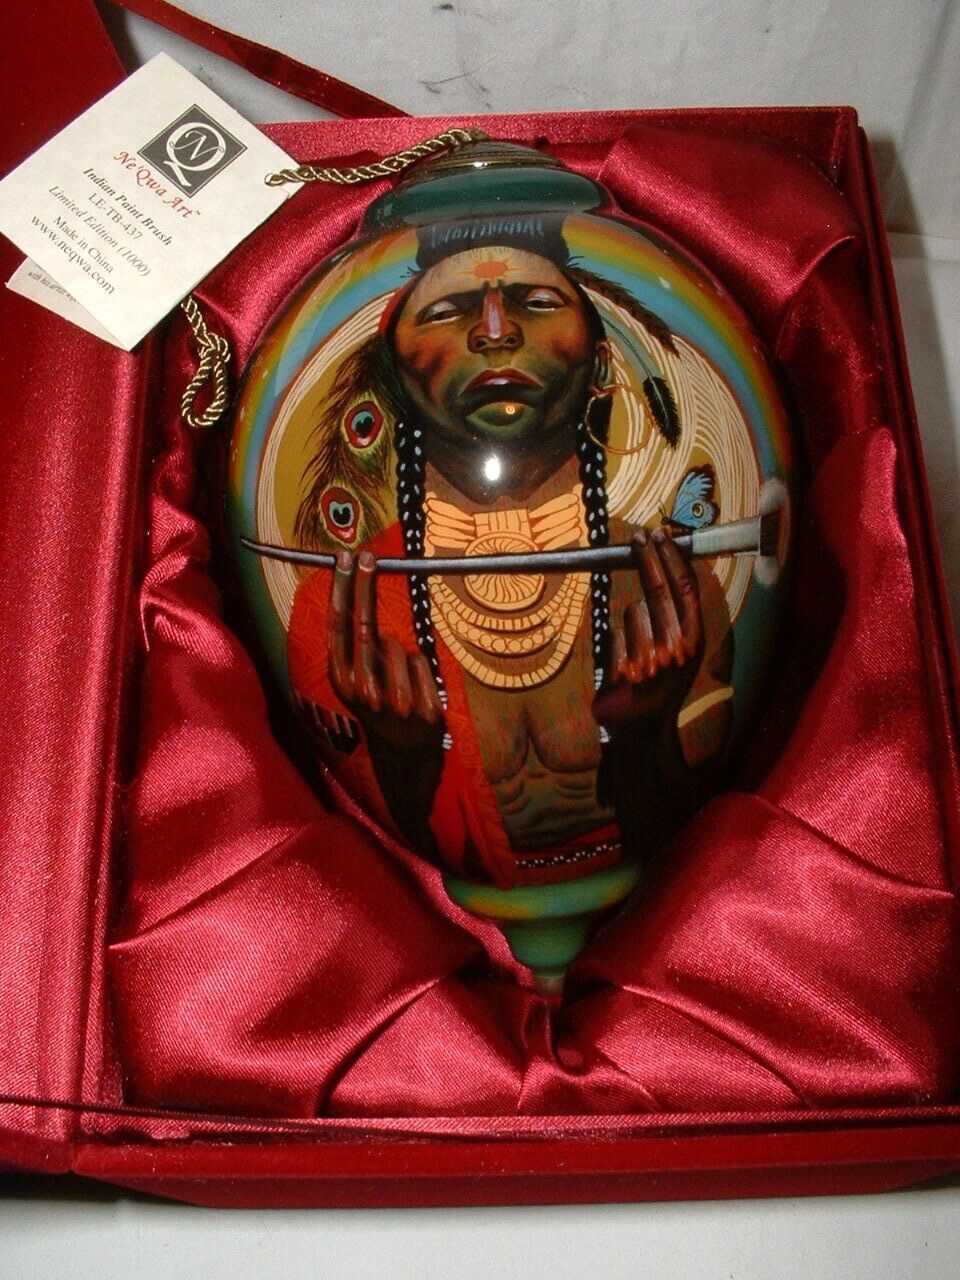 Ne'Qwa Art Glass Ornament "Indian Paint Brush" by Thomas Blackshear - Limited Edition